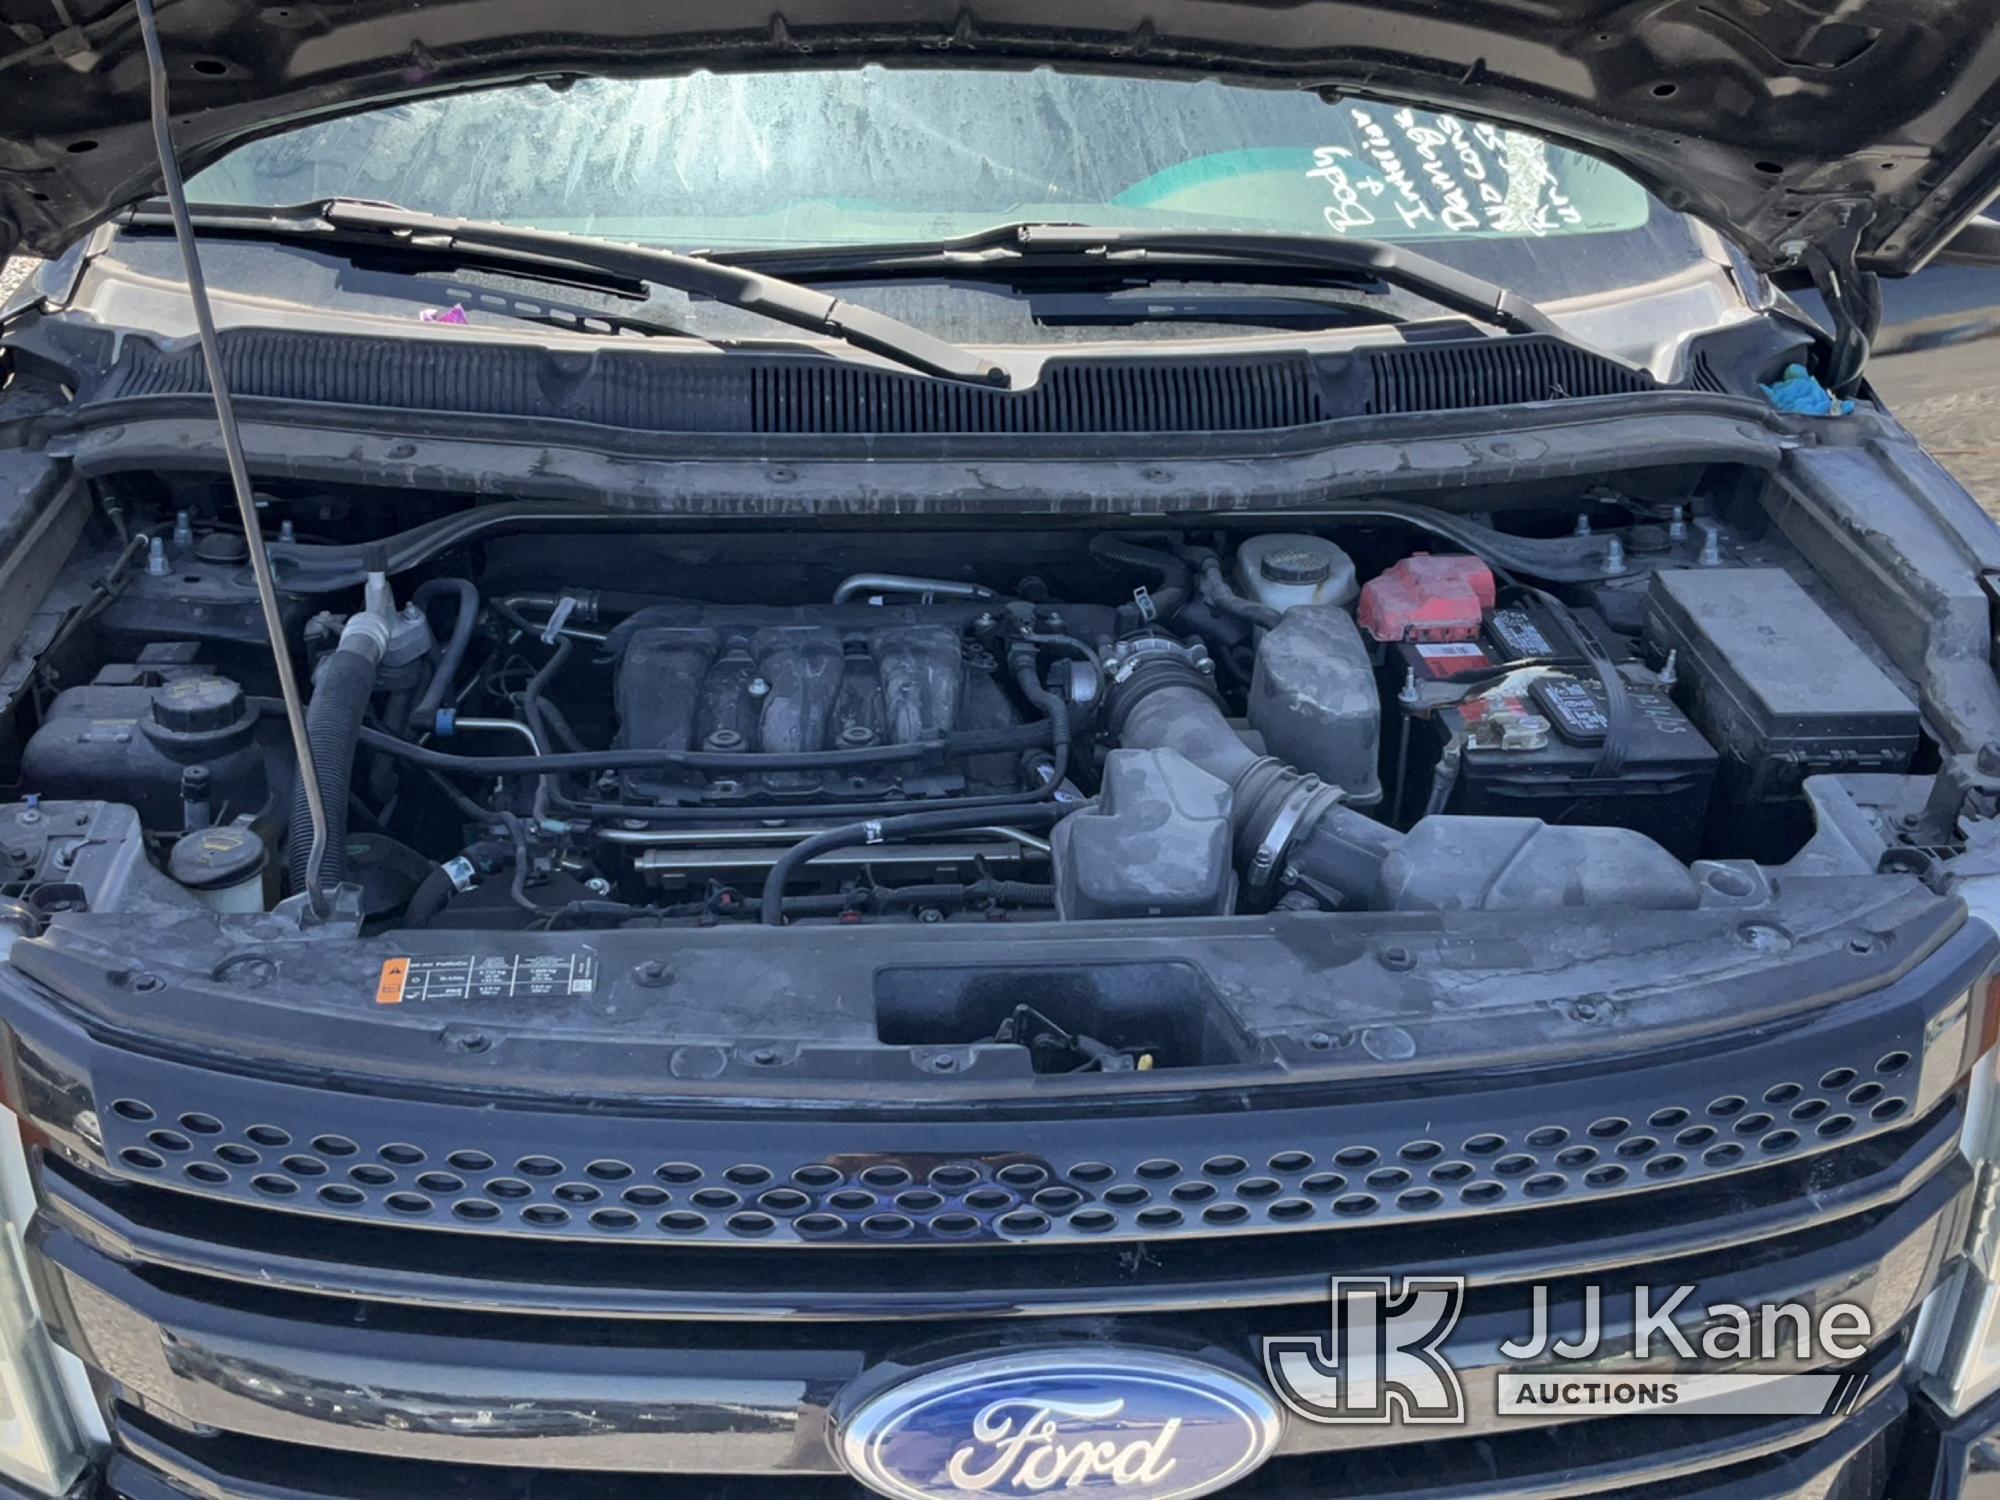 (Las Vegas, NV) 2014 Ford Explorer AWD Police Interceptor Body & Interior Damage, No Console, Rear S